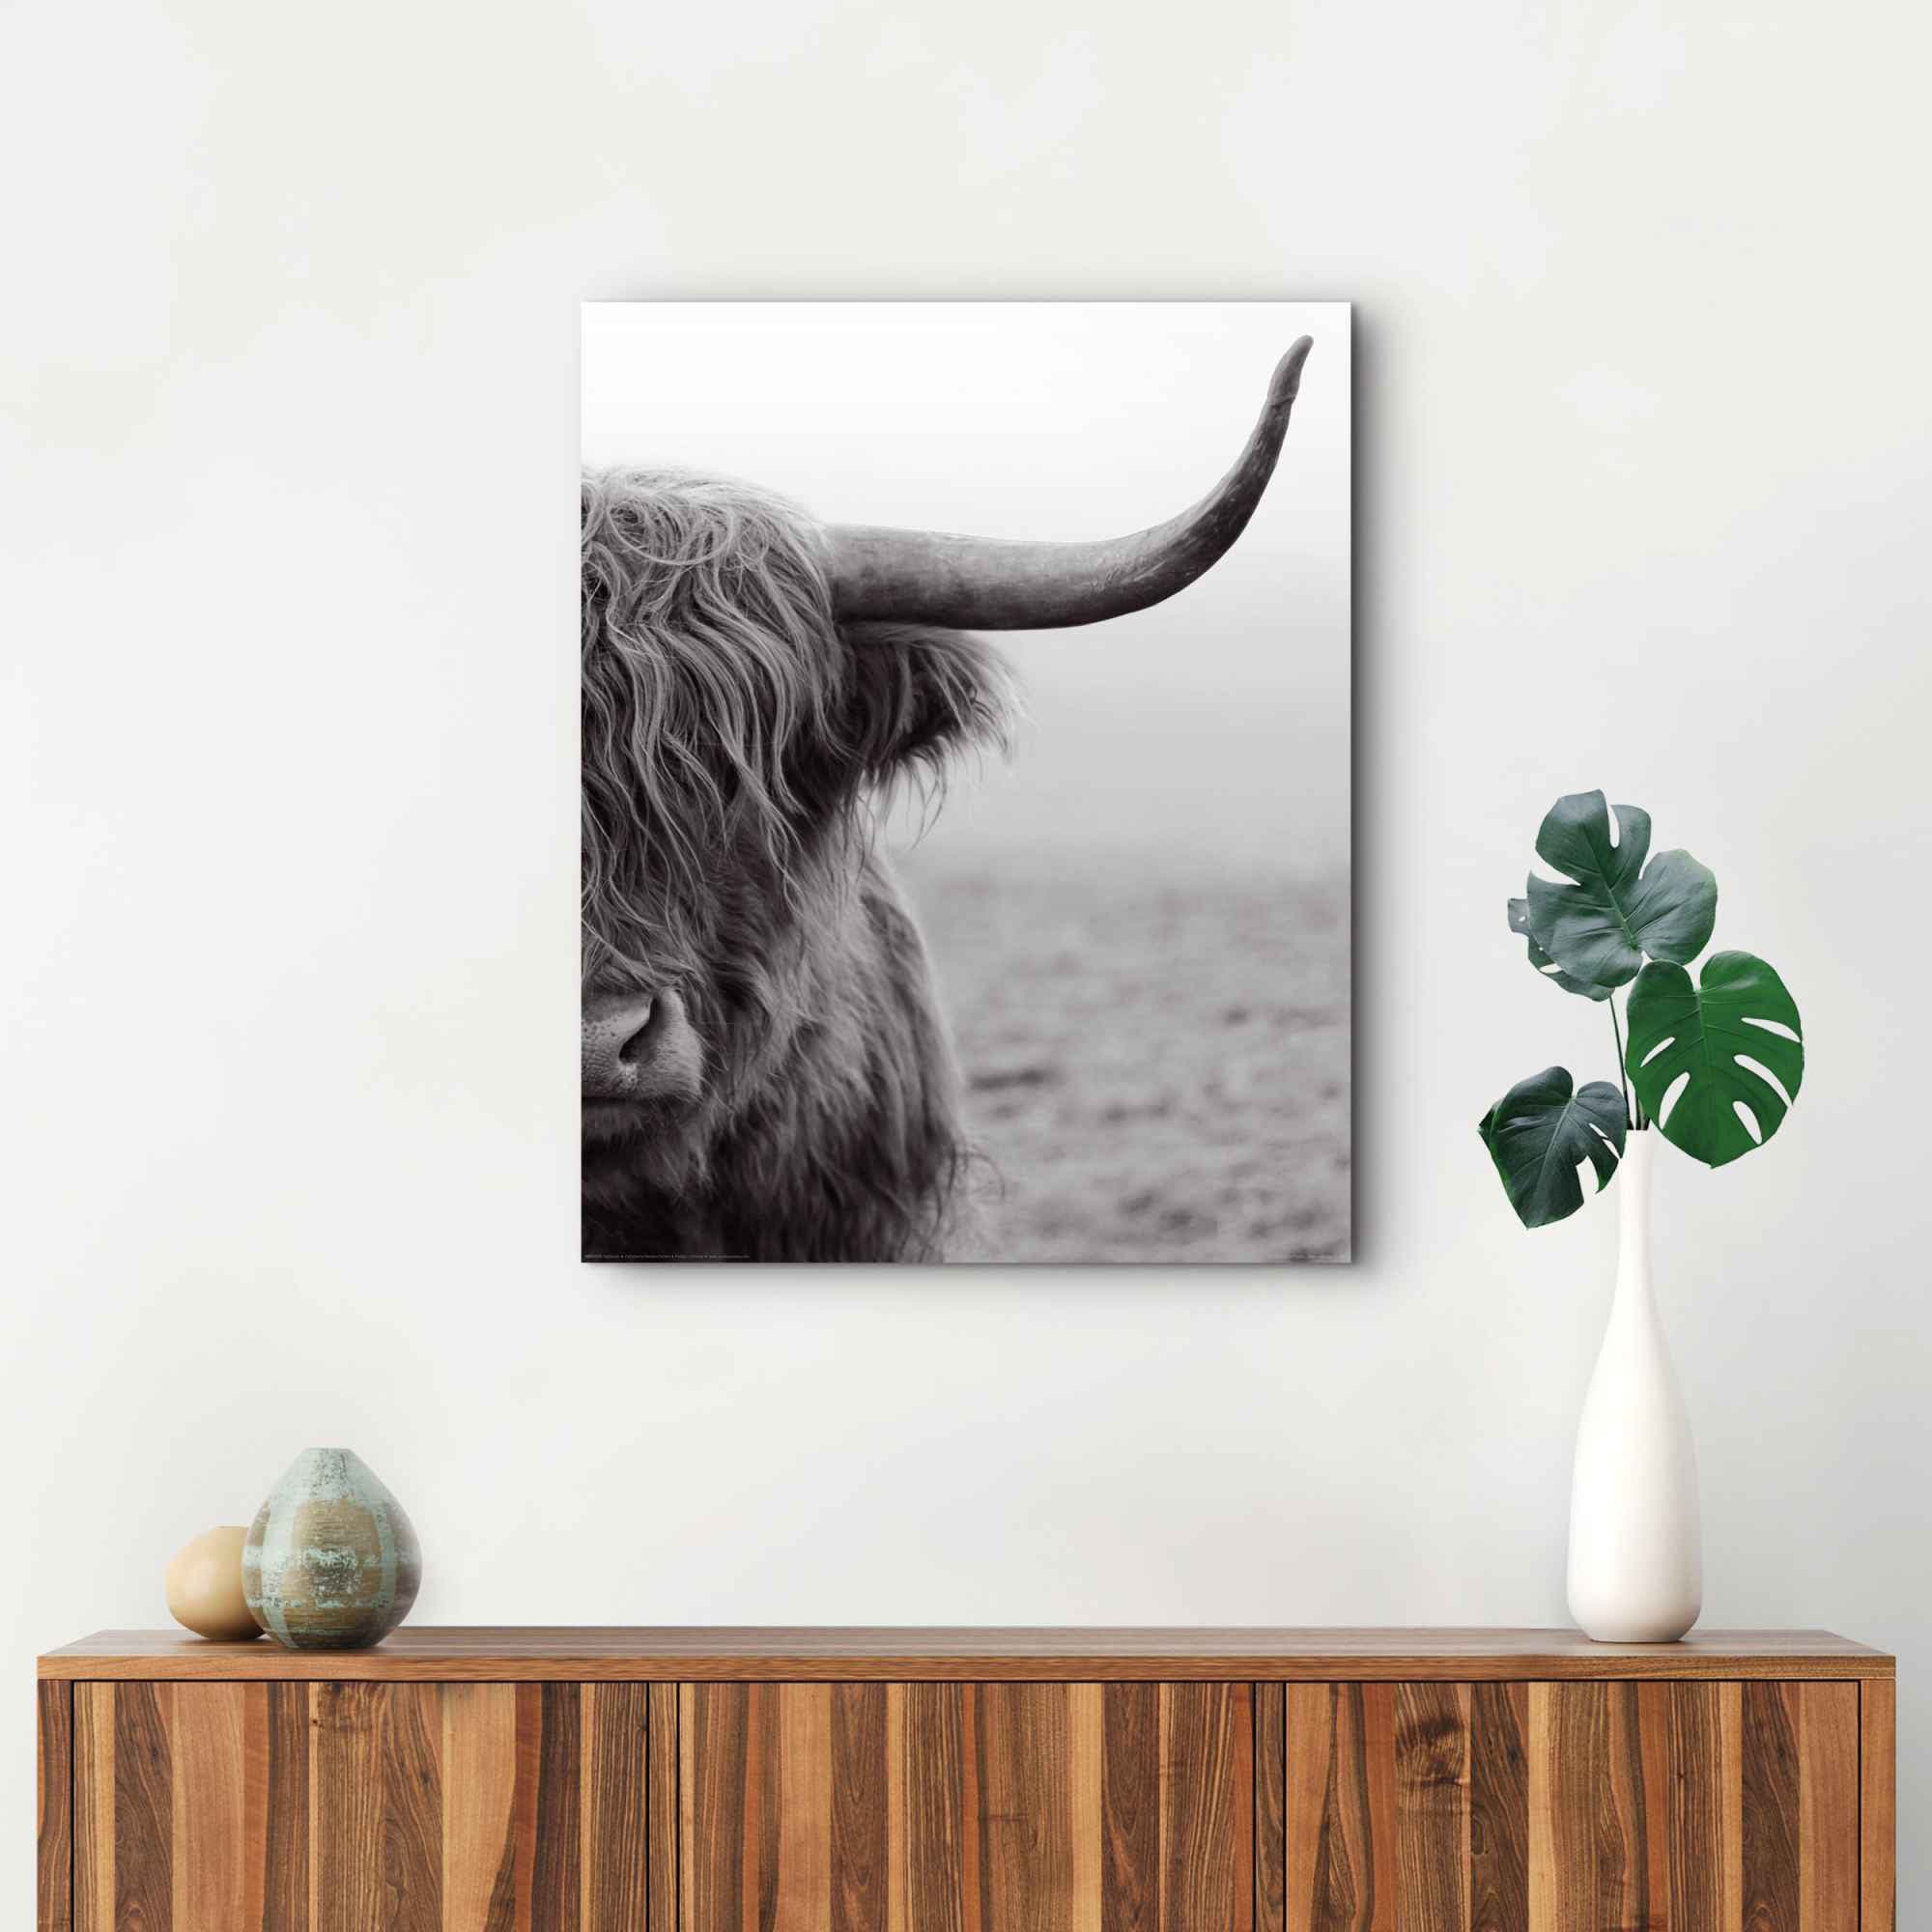 Bulle »Wandbild Jelmoli-Online Wandbild im Hochlandrind«, Highlander Nahaufnahme Shop Tiermotiv Kuh, St.) ordern - Reinders! - (1